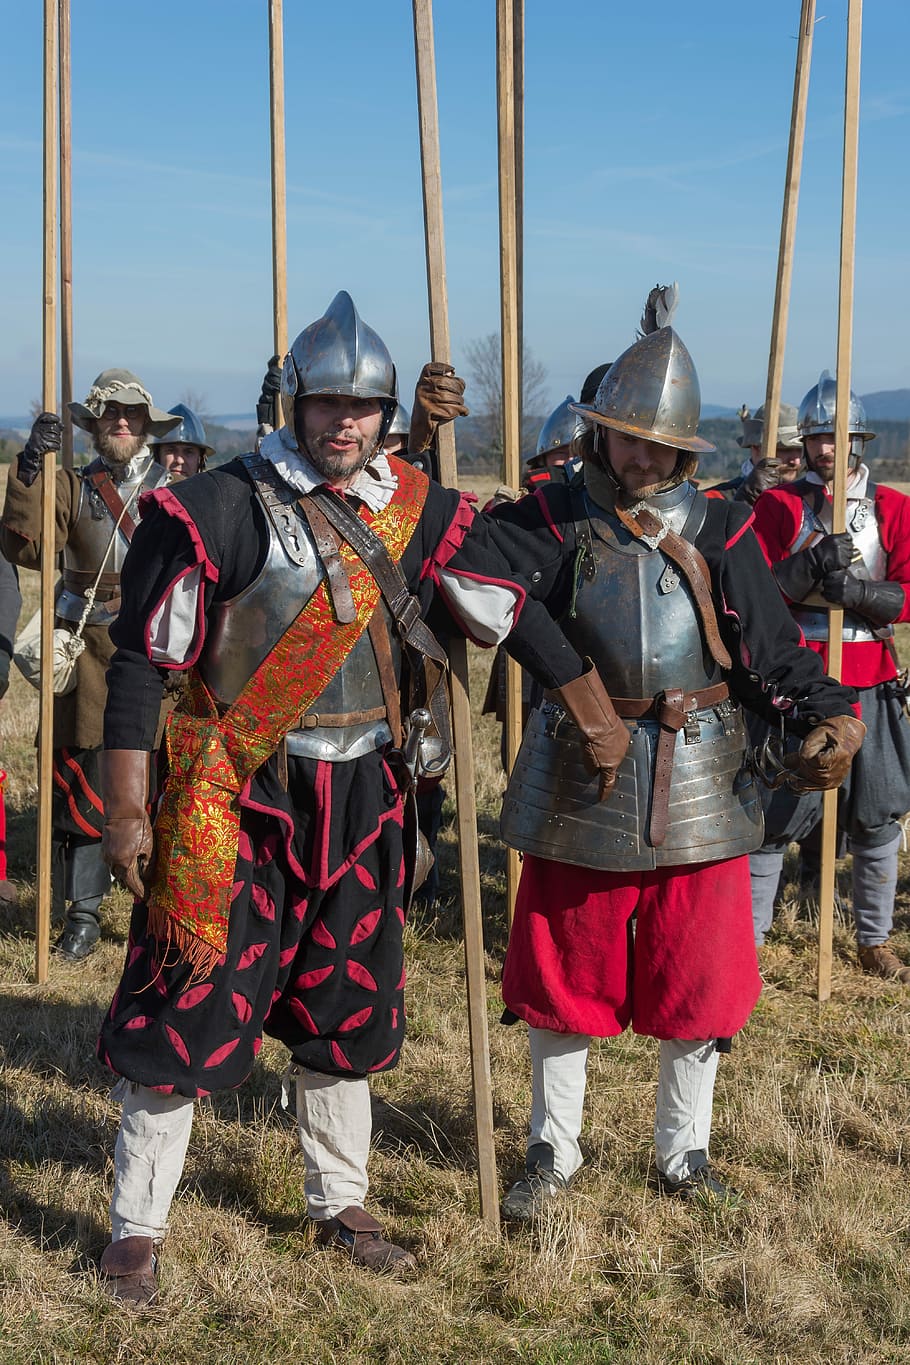 pikanýr, battle, jankau, Battle Of Jankau, battle re-enactment, historical costume, soldier, headwear, protection, helmet